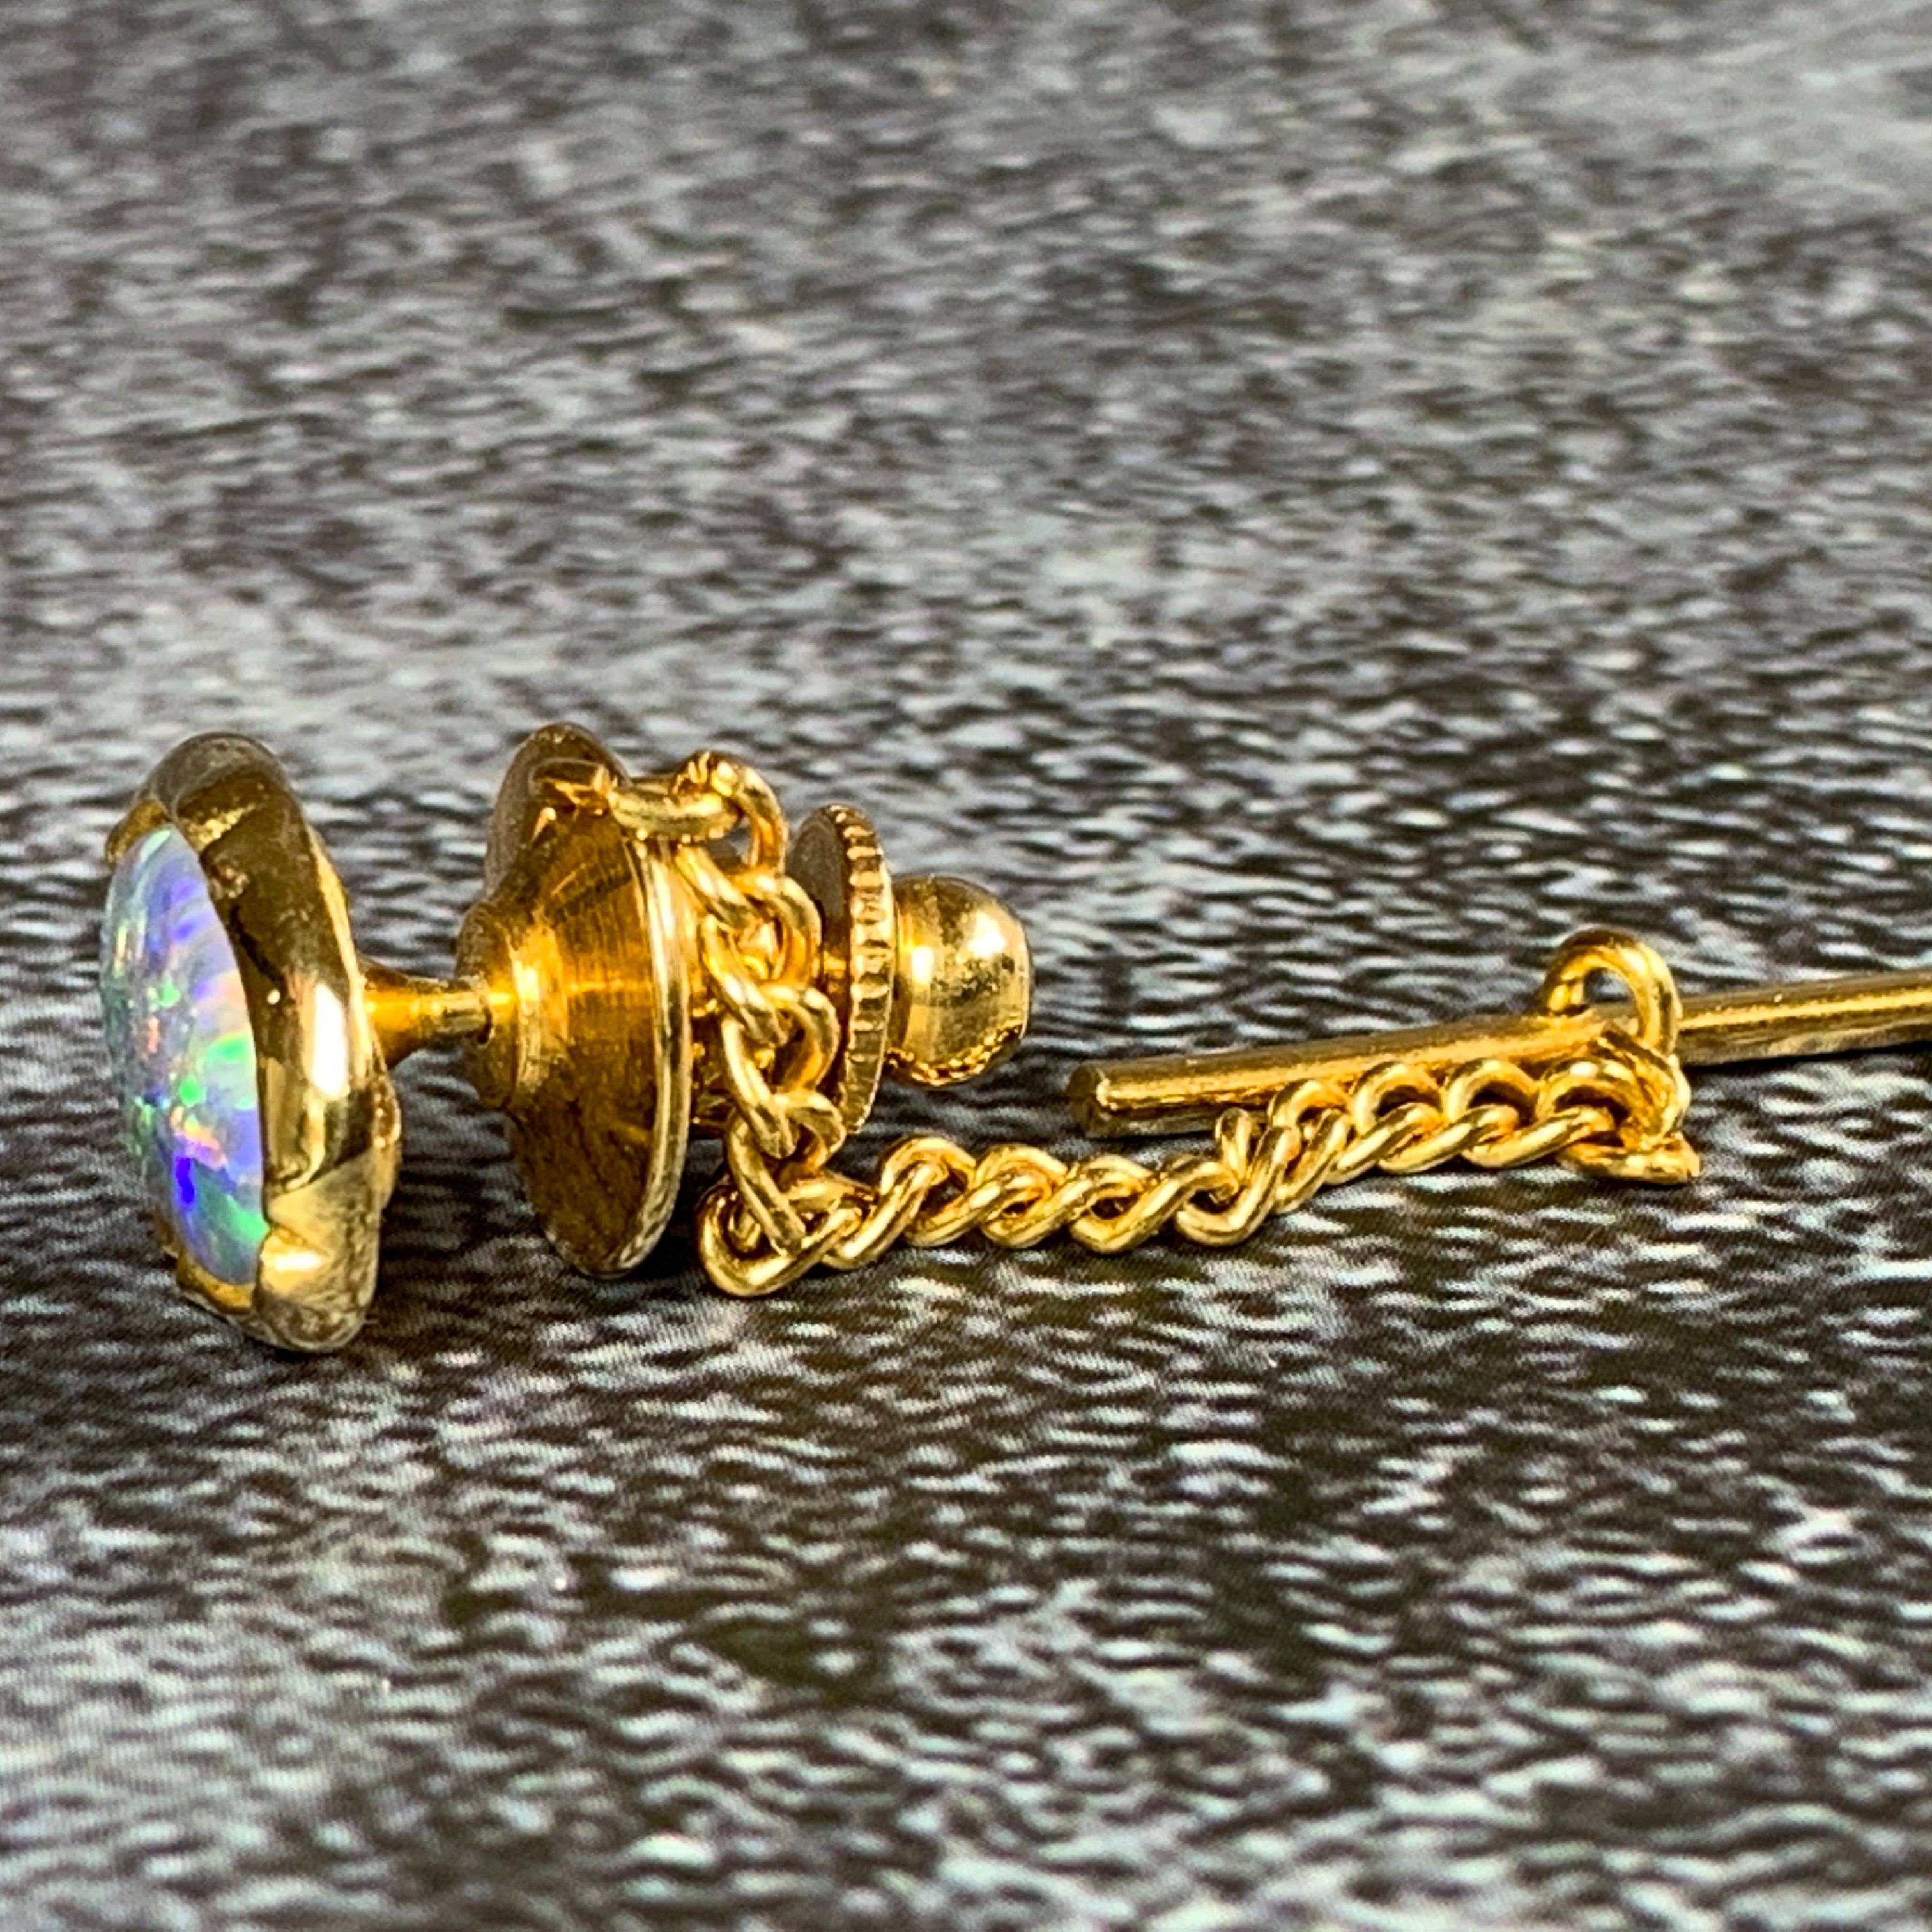 Tie tac gold plated with Opal triplet 10x8mm - Masterpiece Jewellery Opal & Gems Sydney Australia | Online Shop